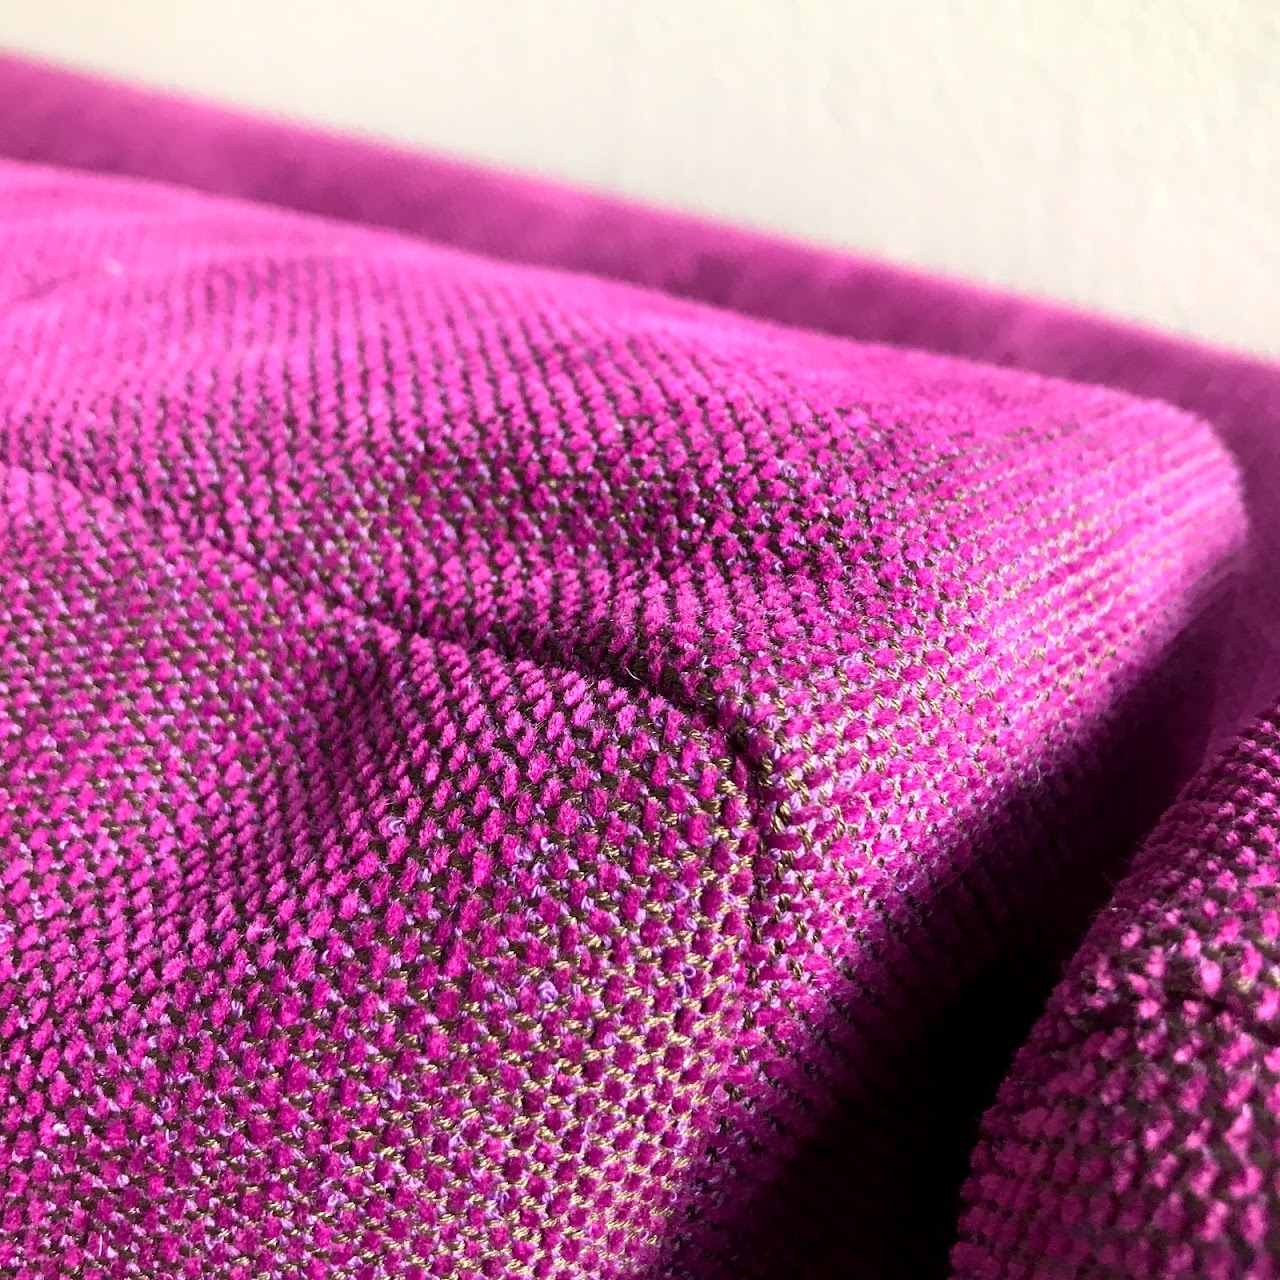 Albert Menin Interiors Purple Sofa